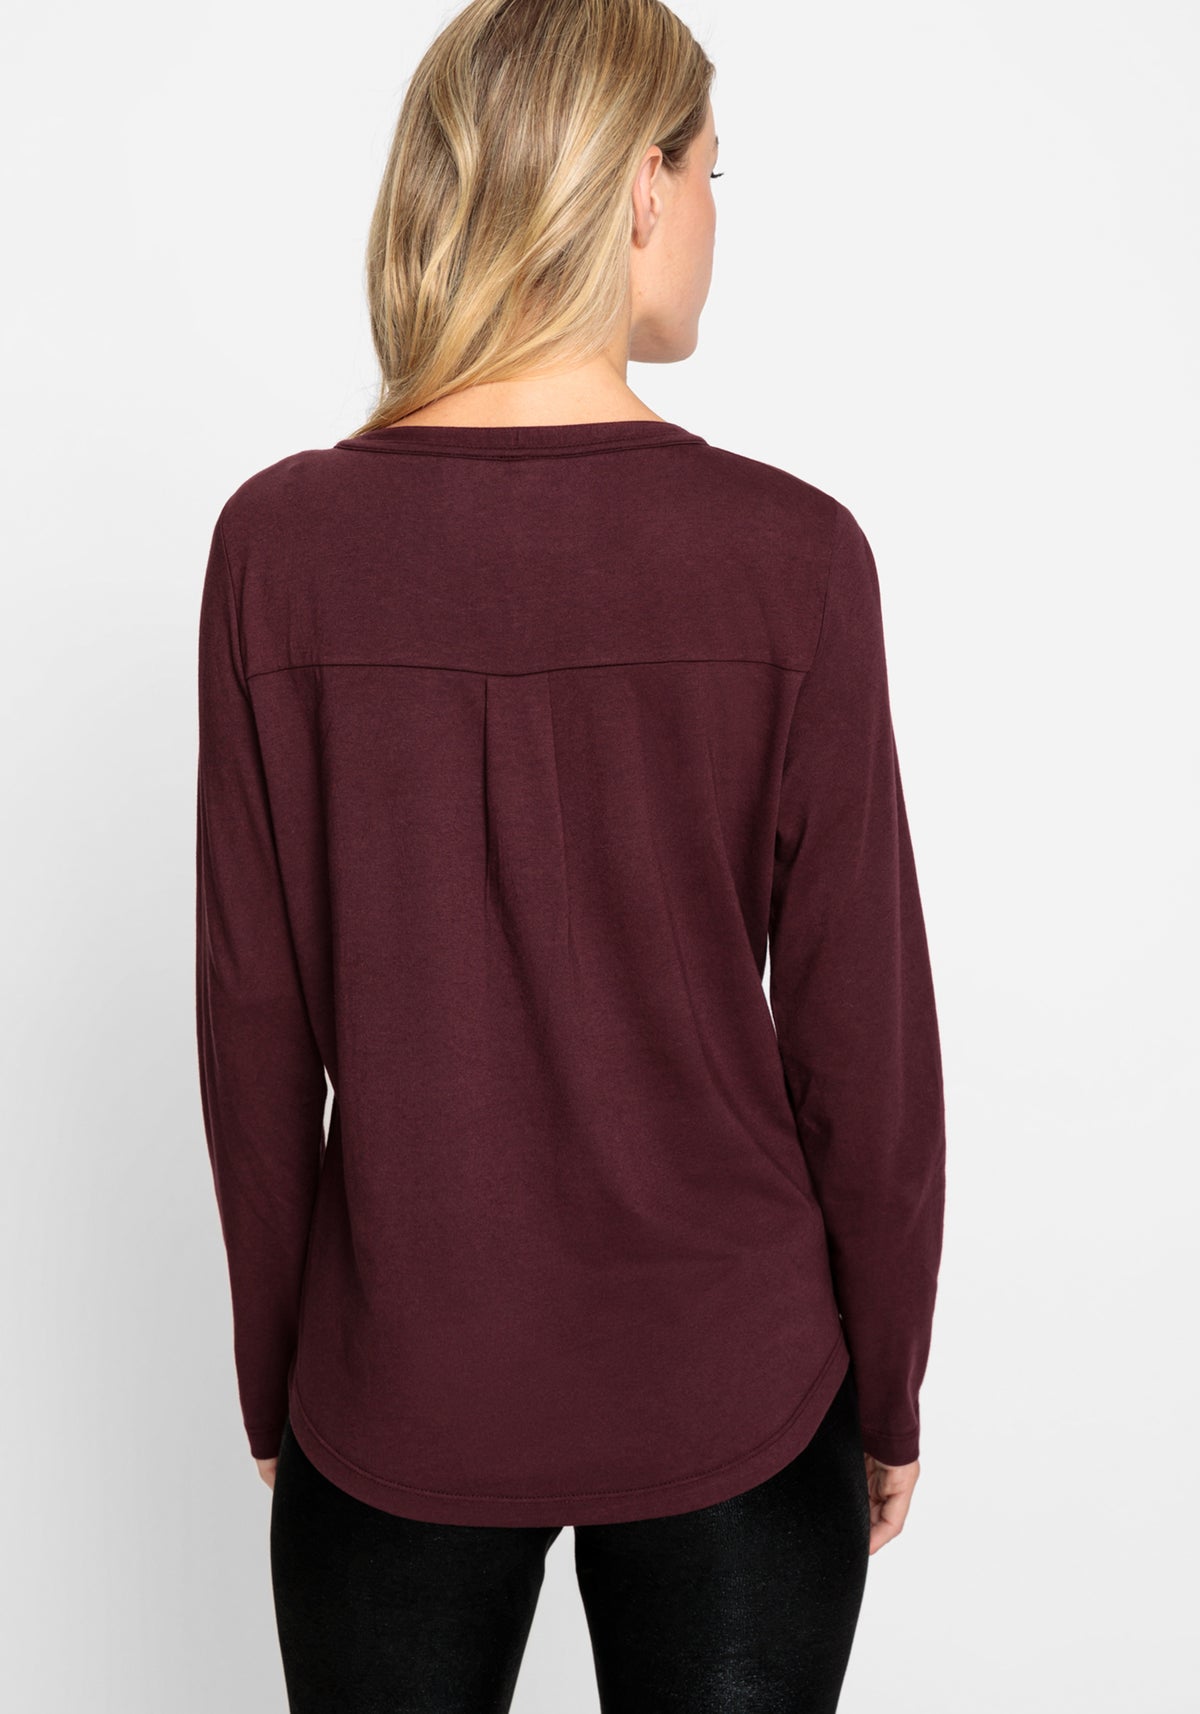 Cotton Blend Long Sleeve Sequin T-Shirt containing TENCEL™ Modal